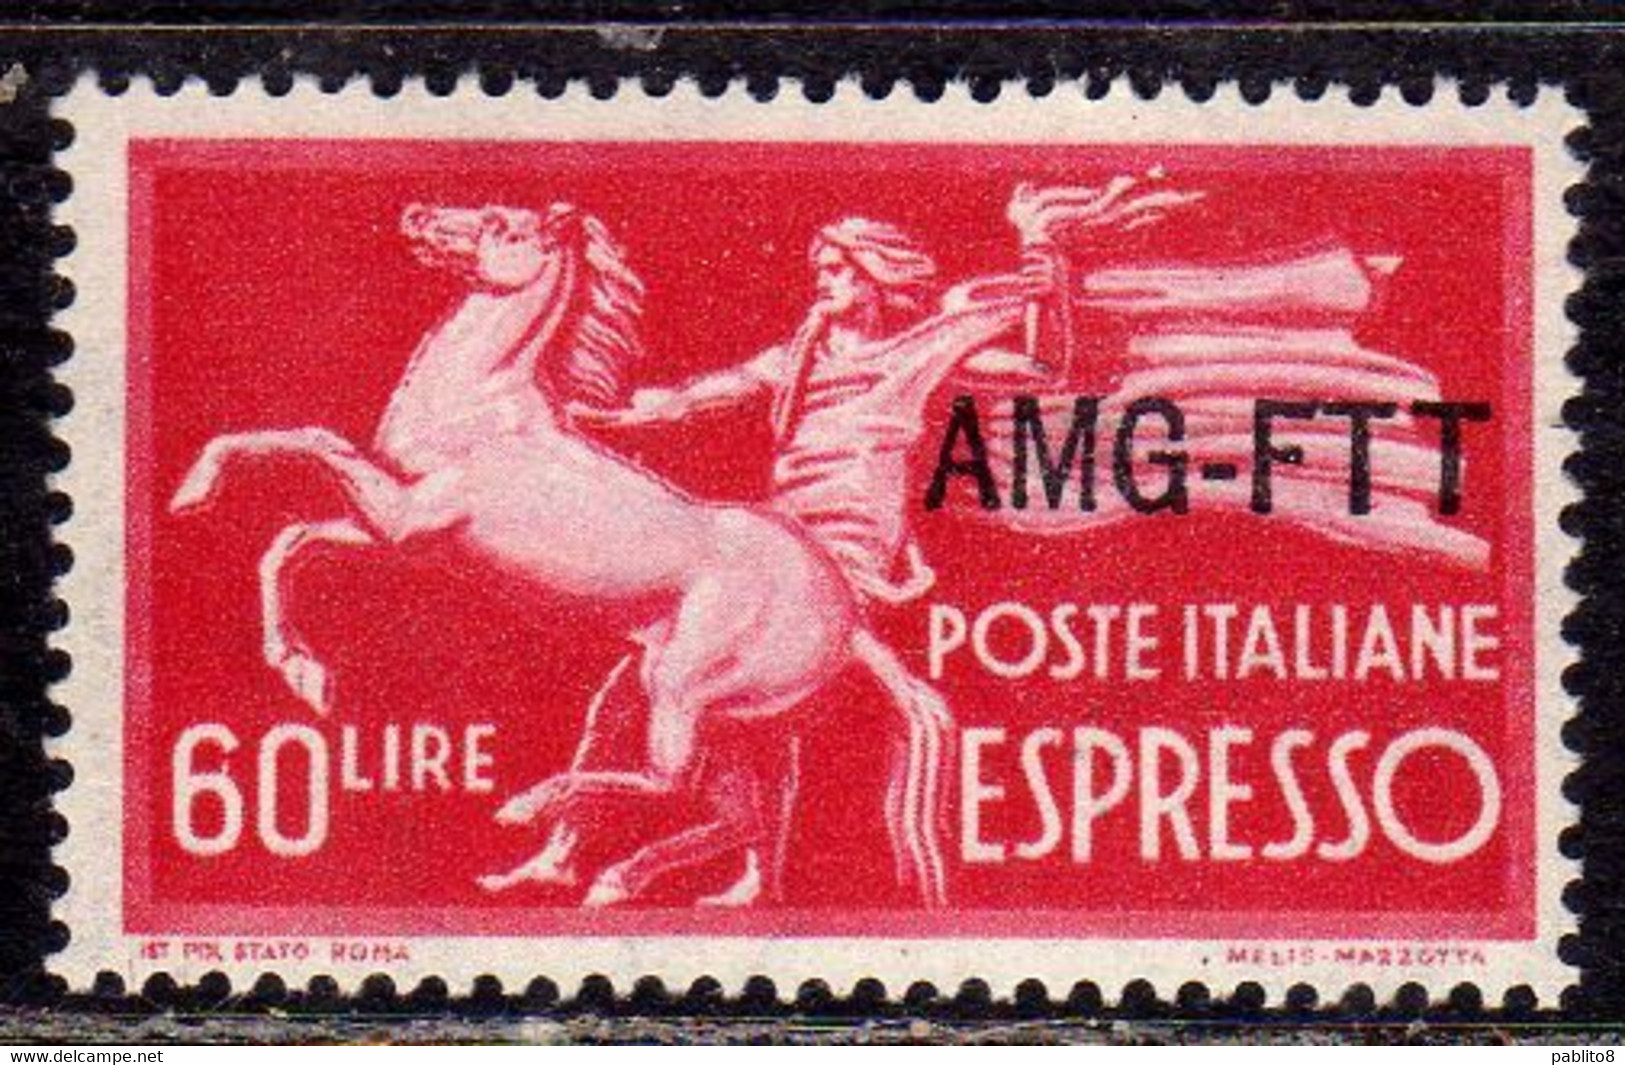 TRIESTE A 1950 AMG-FTT OVERPRINTED ESPRESSO SPECIAL DELIVERY LIRE 60 MNH BEN CENTRATO - Posta Espresso